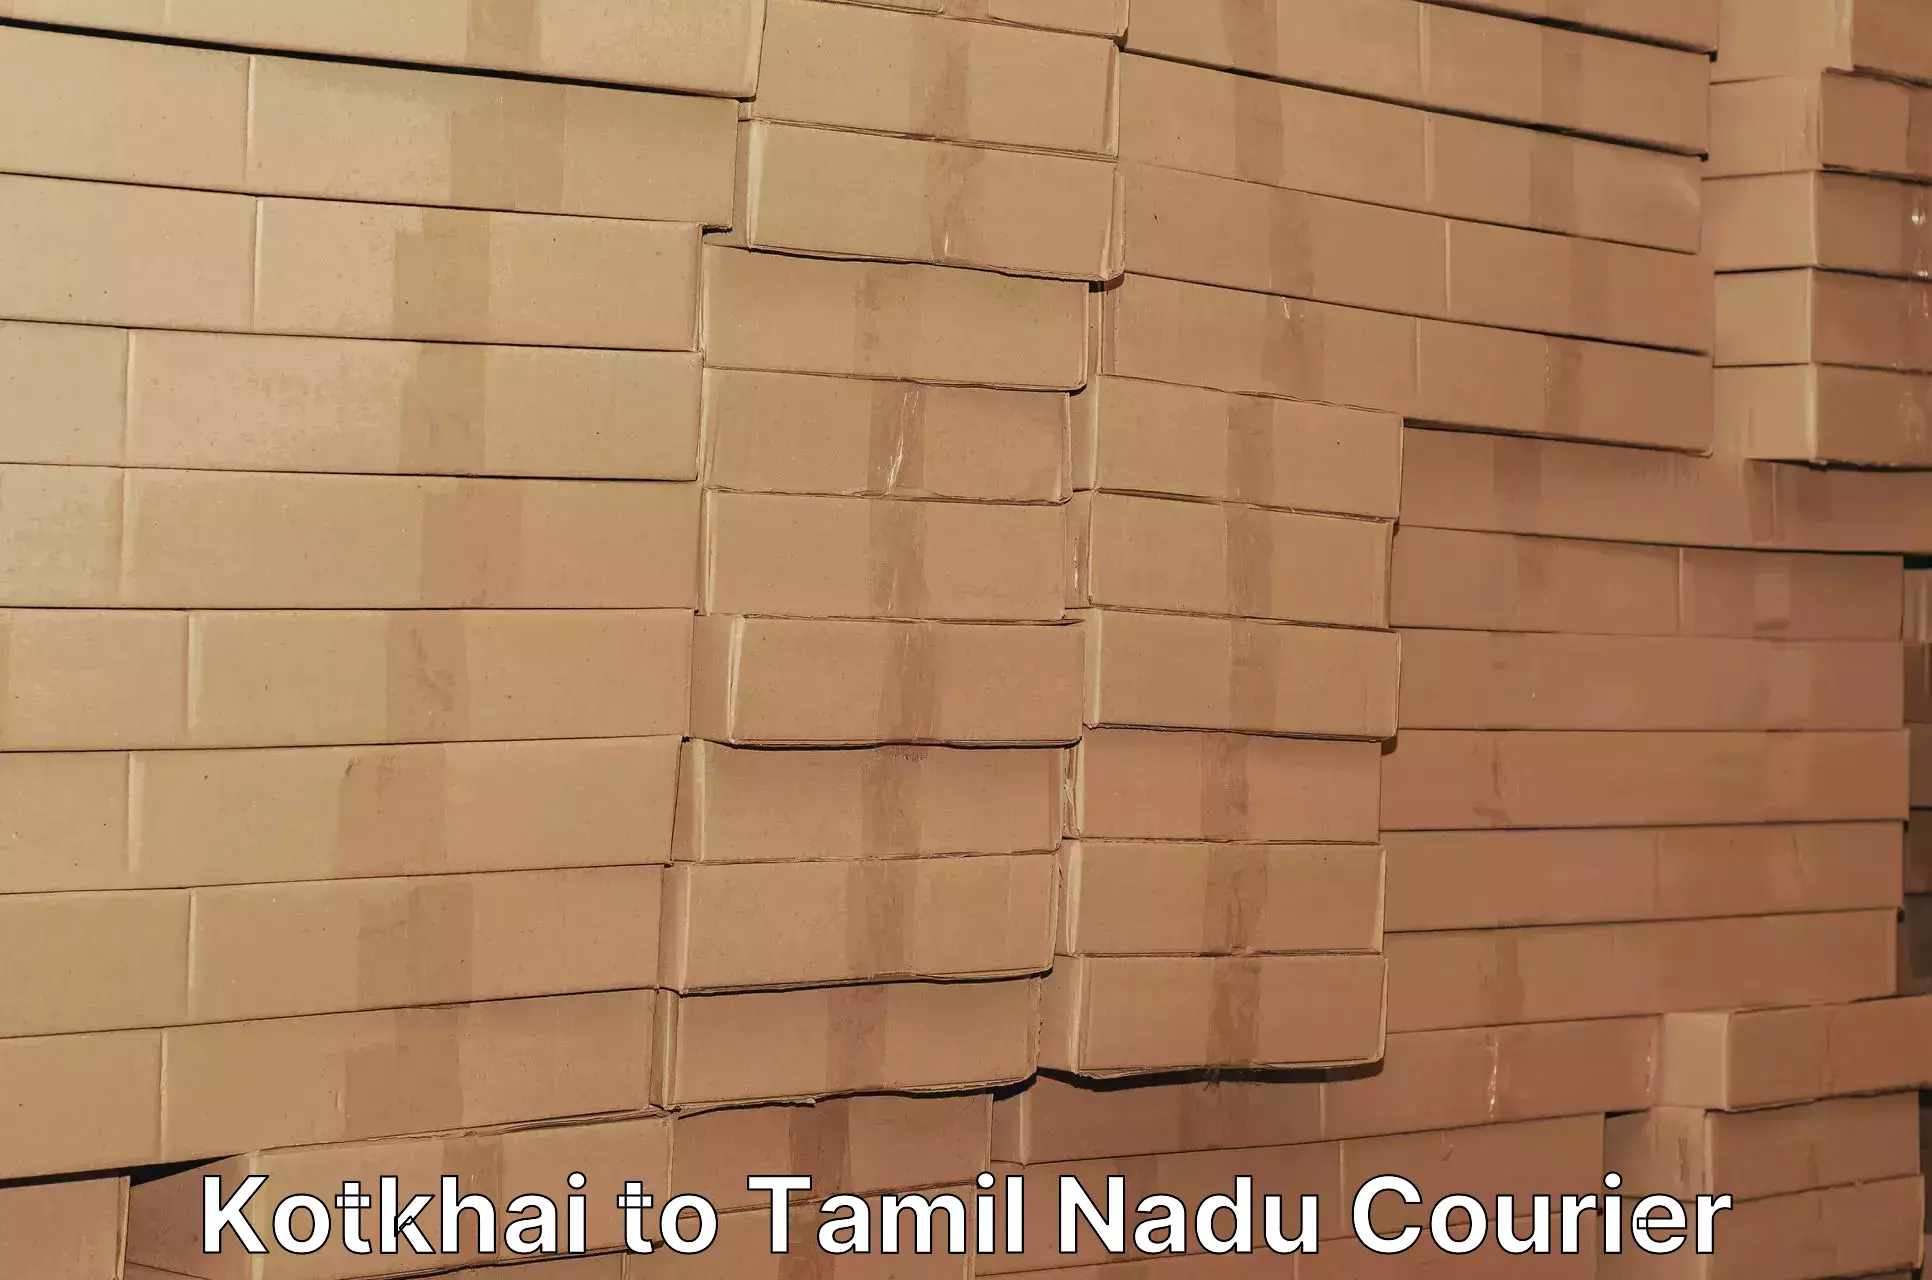 Courier service innovation Kotkhai to Tamil Nadu